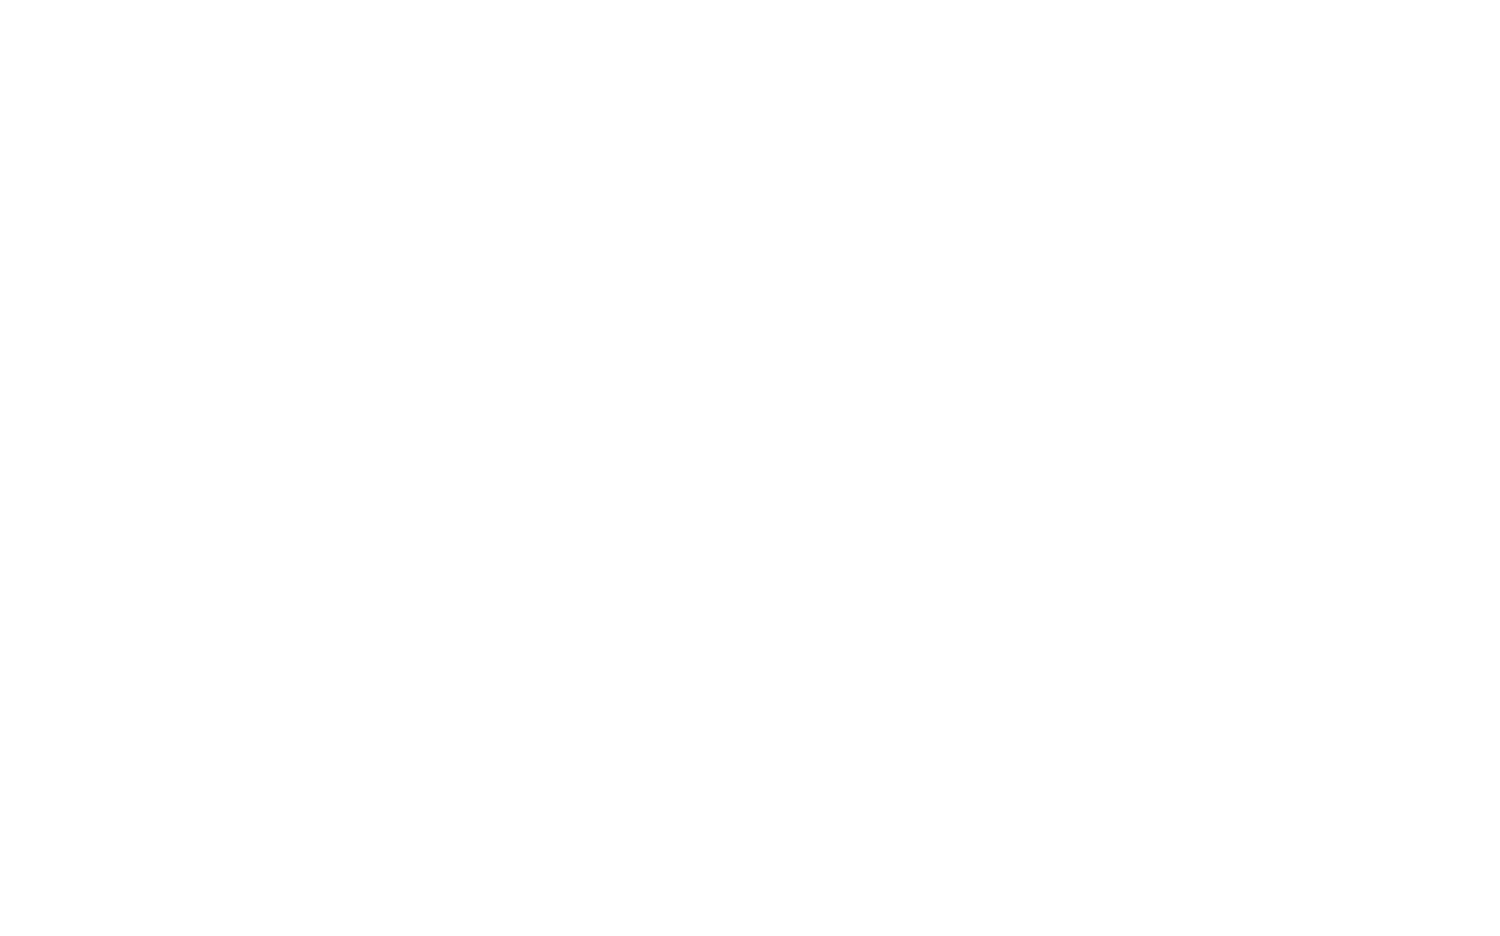 OCTAVIO LLANO